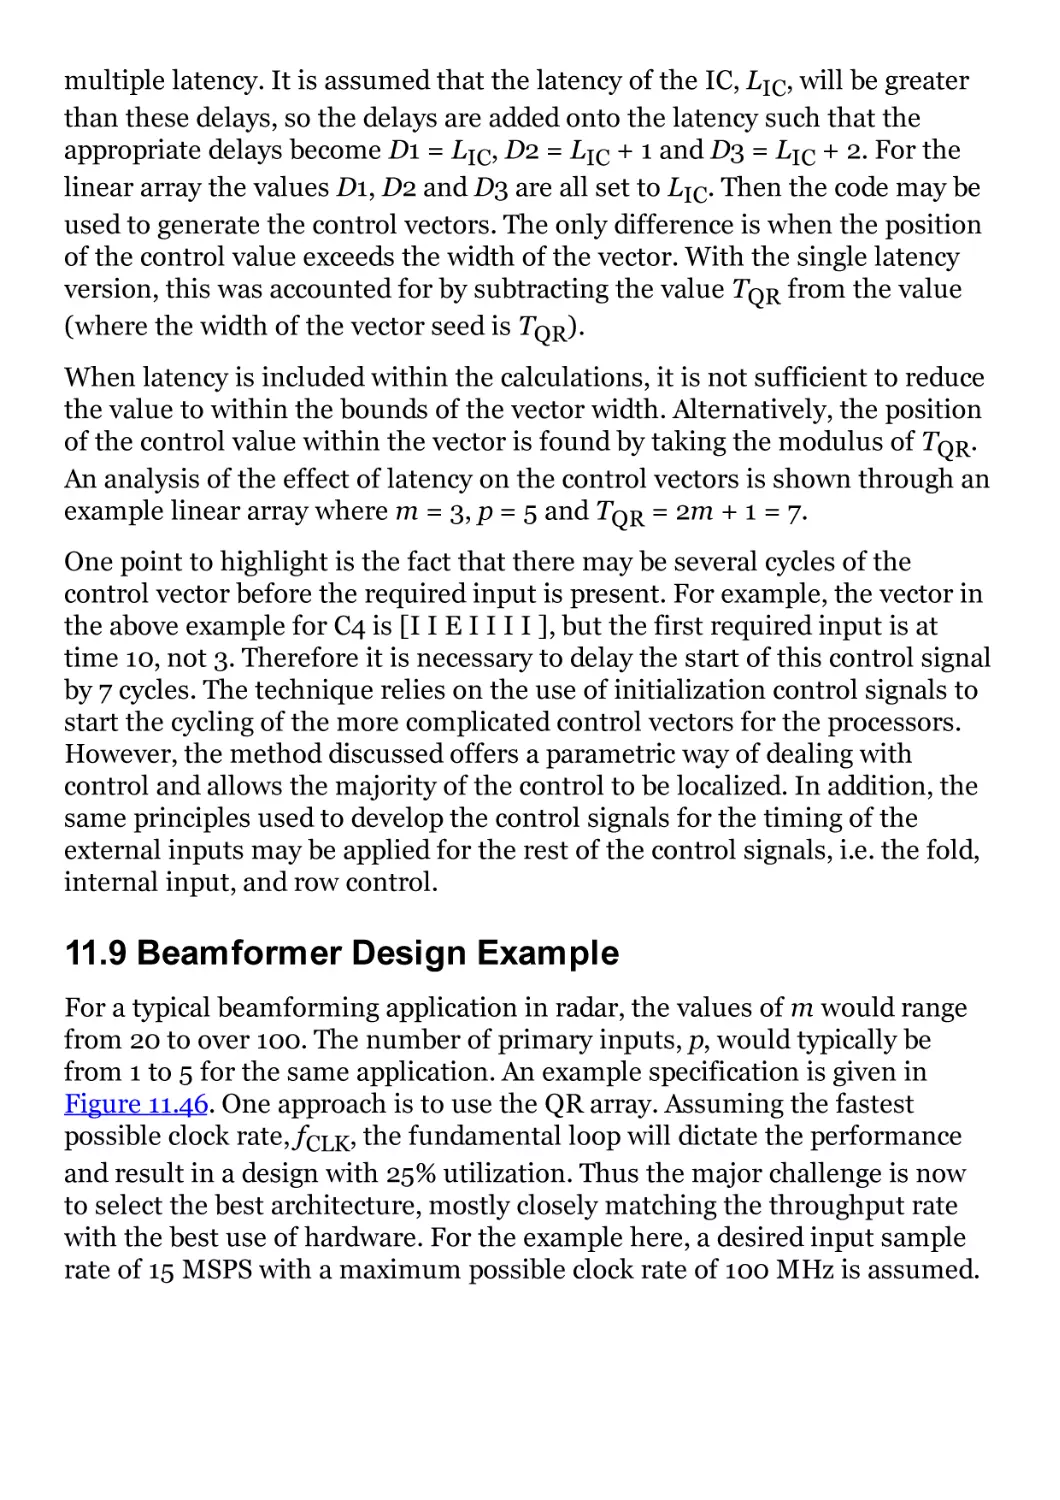 11.9 Beamformer Design Example